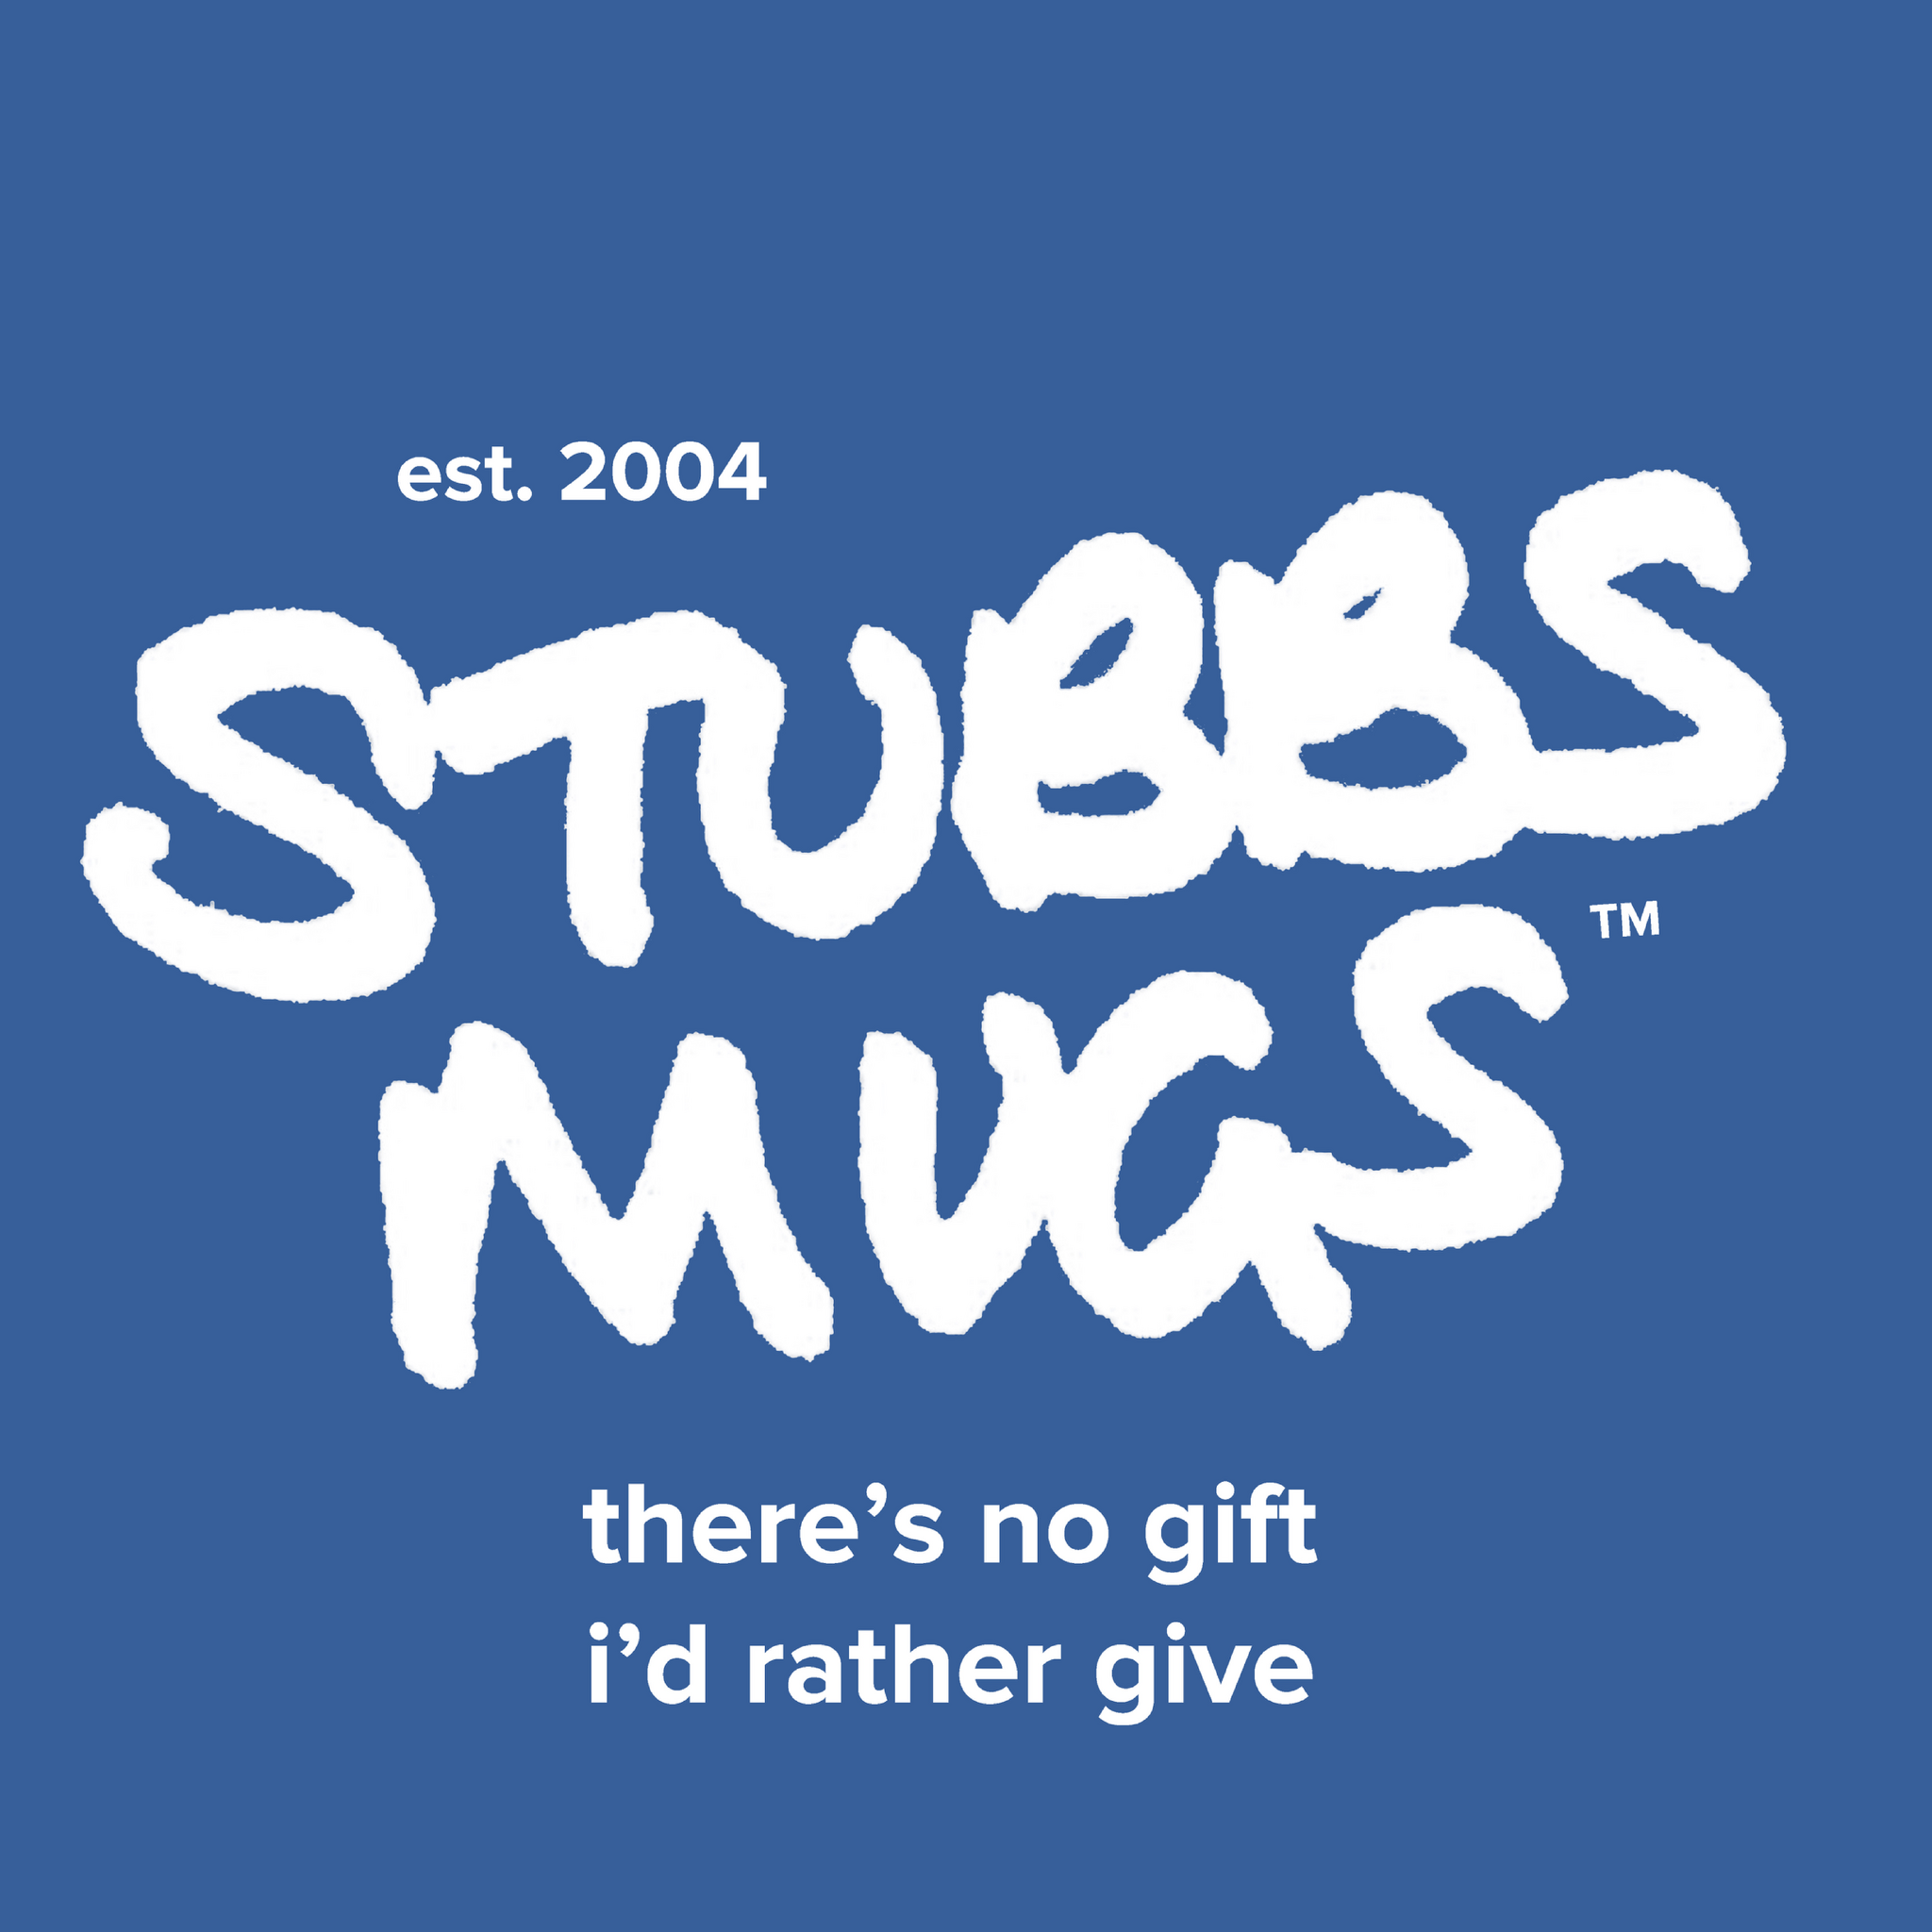 Stubbs Muggs